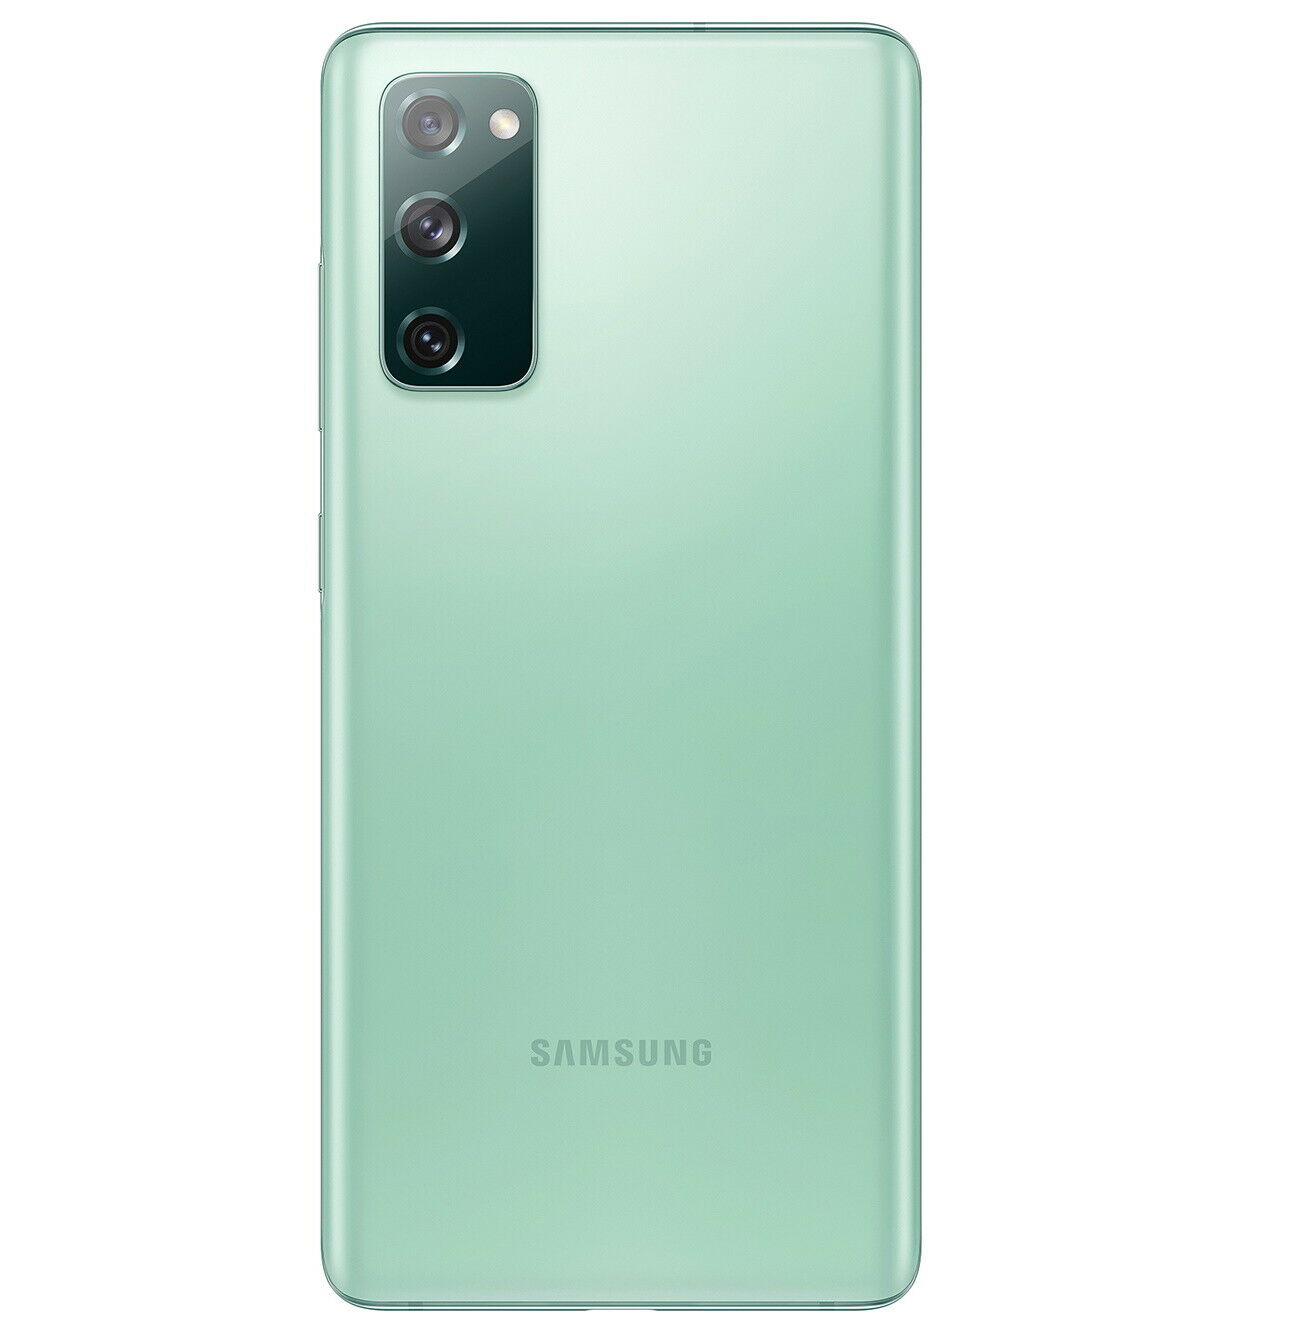 Samsung Galaxy S20 FE Sim Unlocked (Brand New)